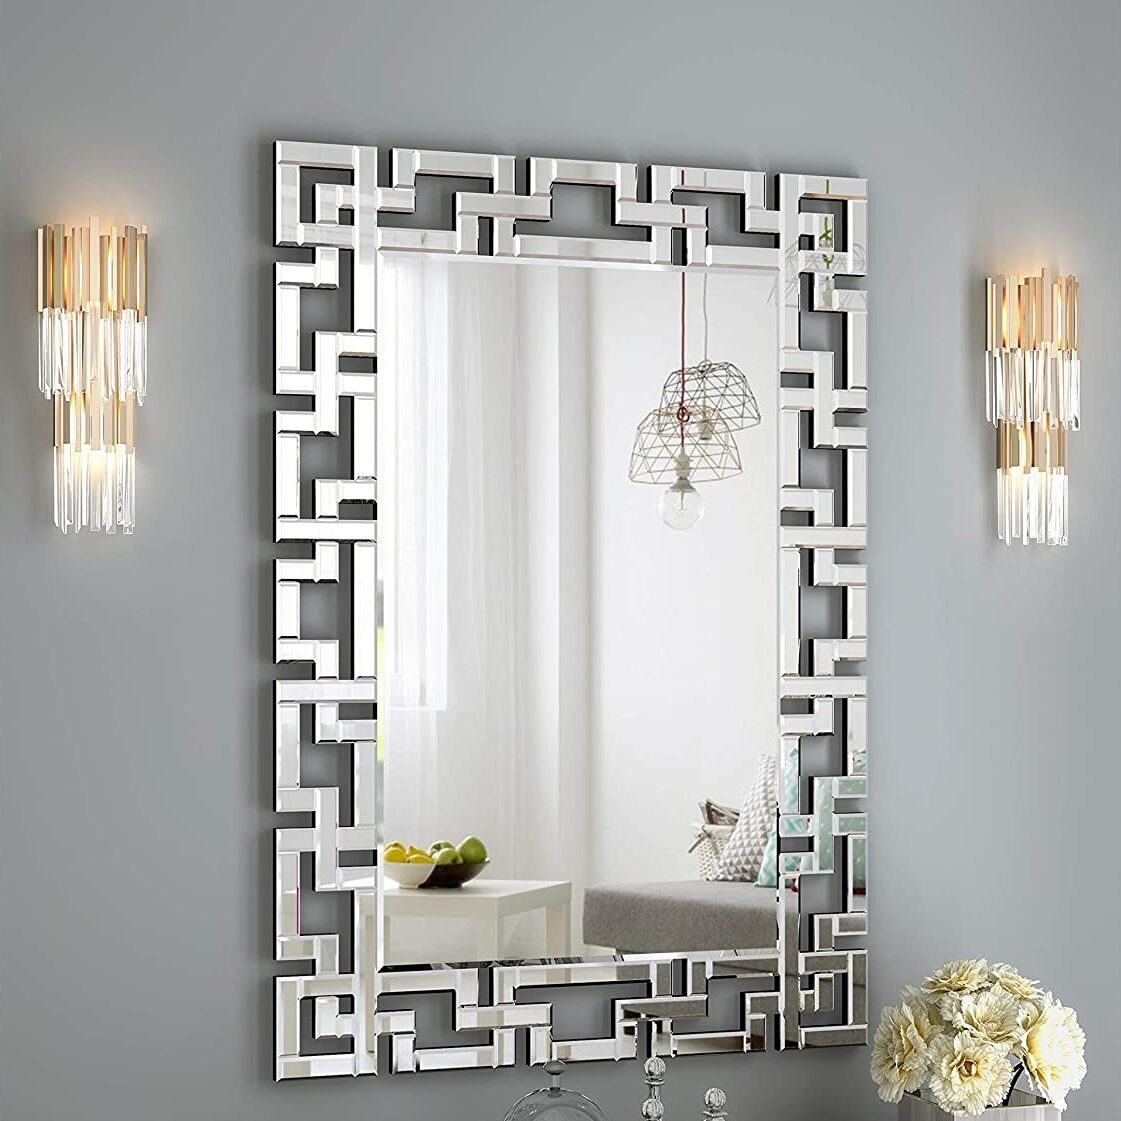 HD-21009 Contemporary Living room wall mirror, Hang Horizontally or Vertically